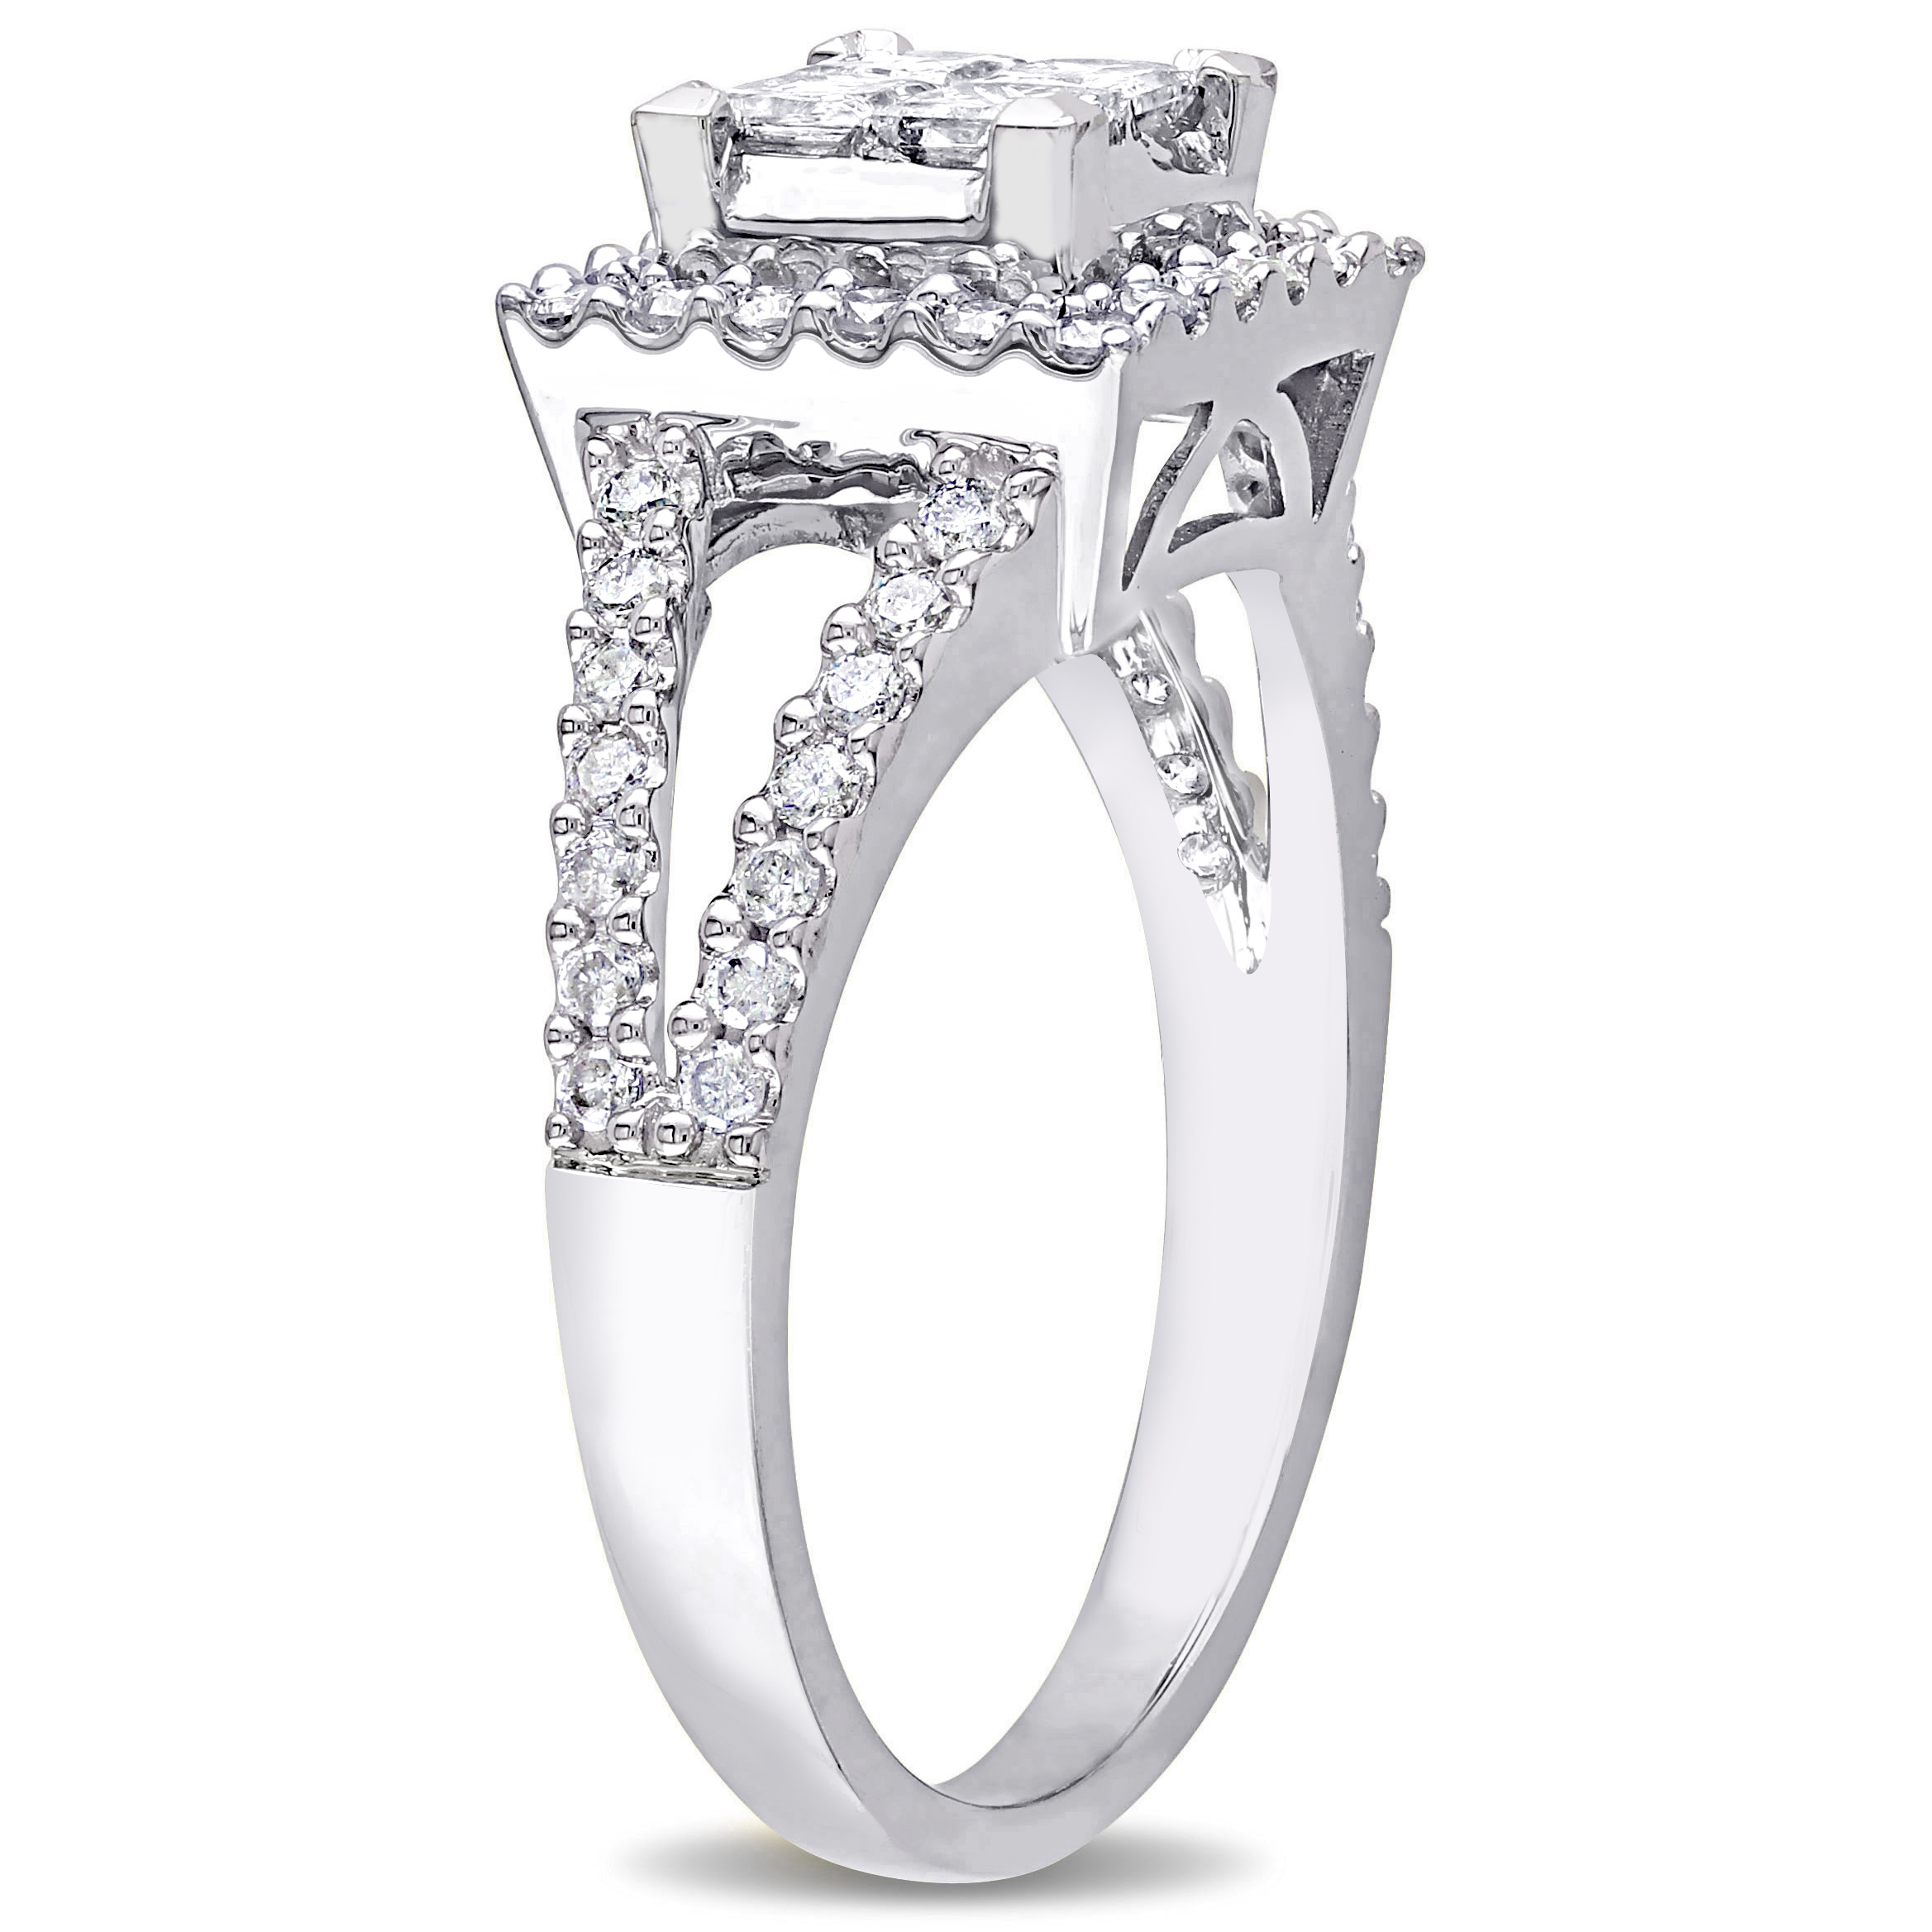 1 Carat Princess Cut Diamond Engagement Ring | Barkev's